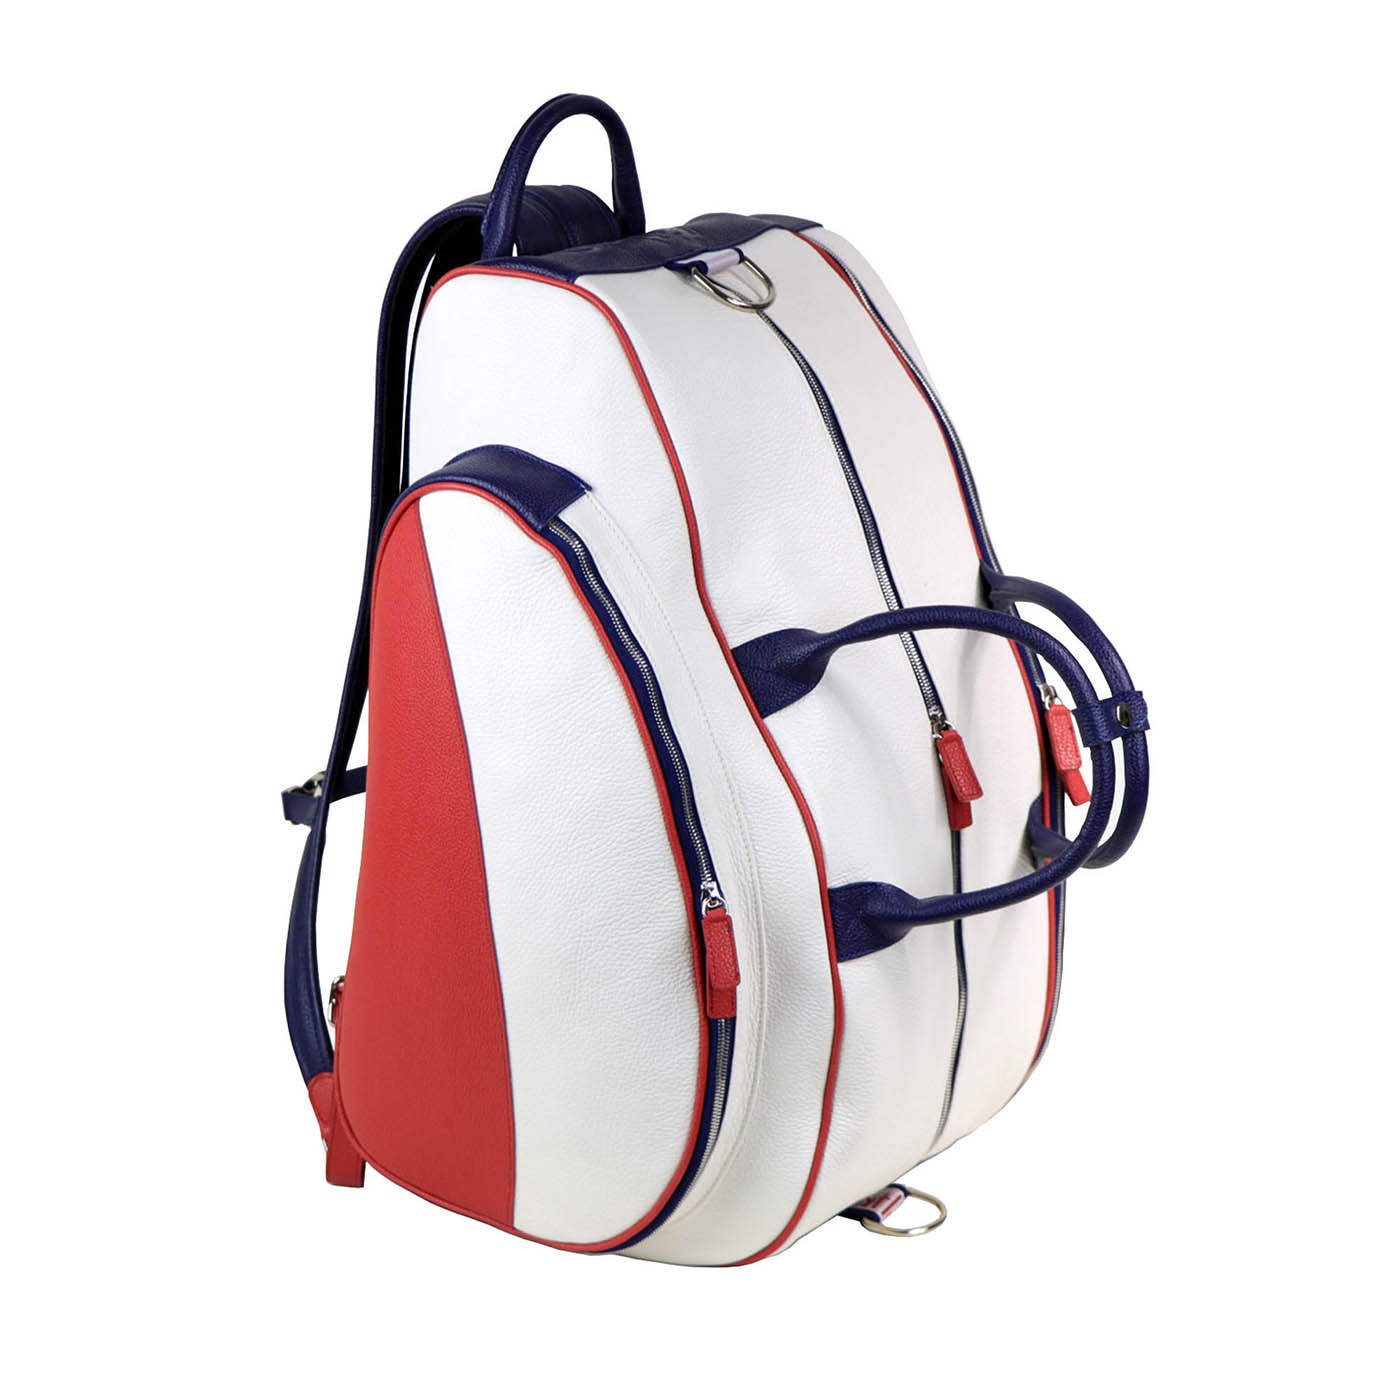 Grand sac à dos blanc/bleu/rouge pour padel et pickleball - Vue principale